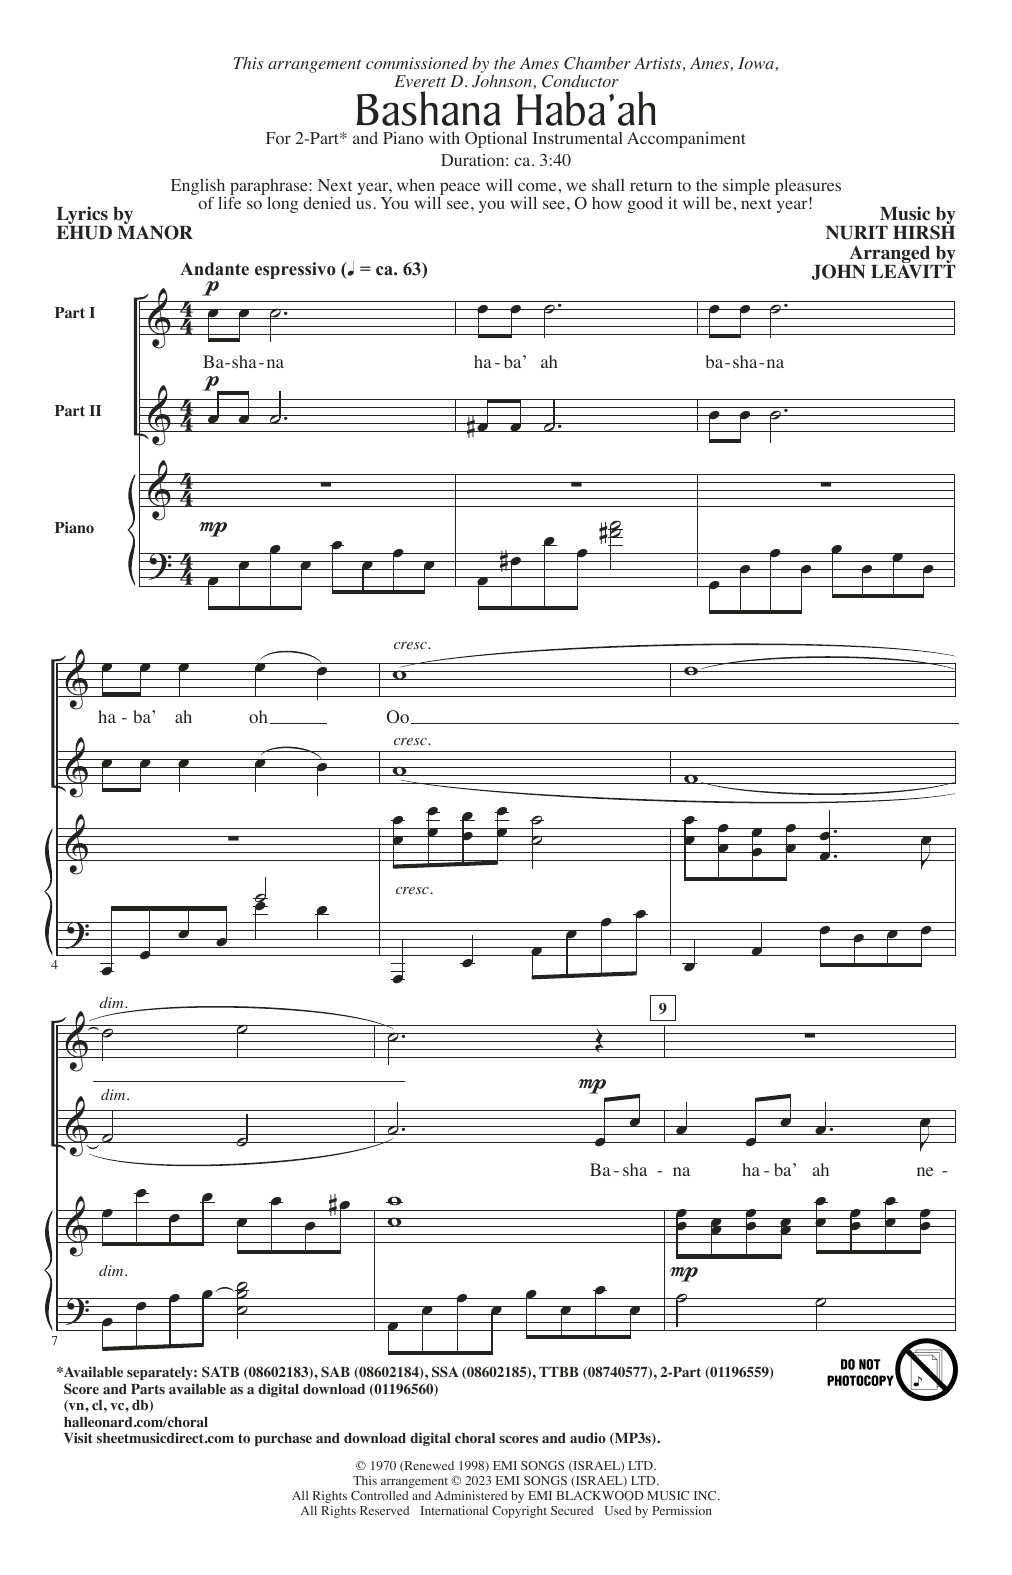 Download Nurit Hirsh Bashana Haba'ah (arr. John Leavitt) Sheet Music and learn how to play SSA Choir PDF digital score in minutes